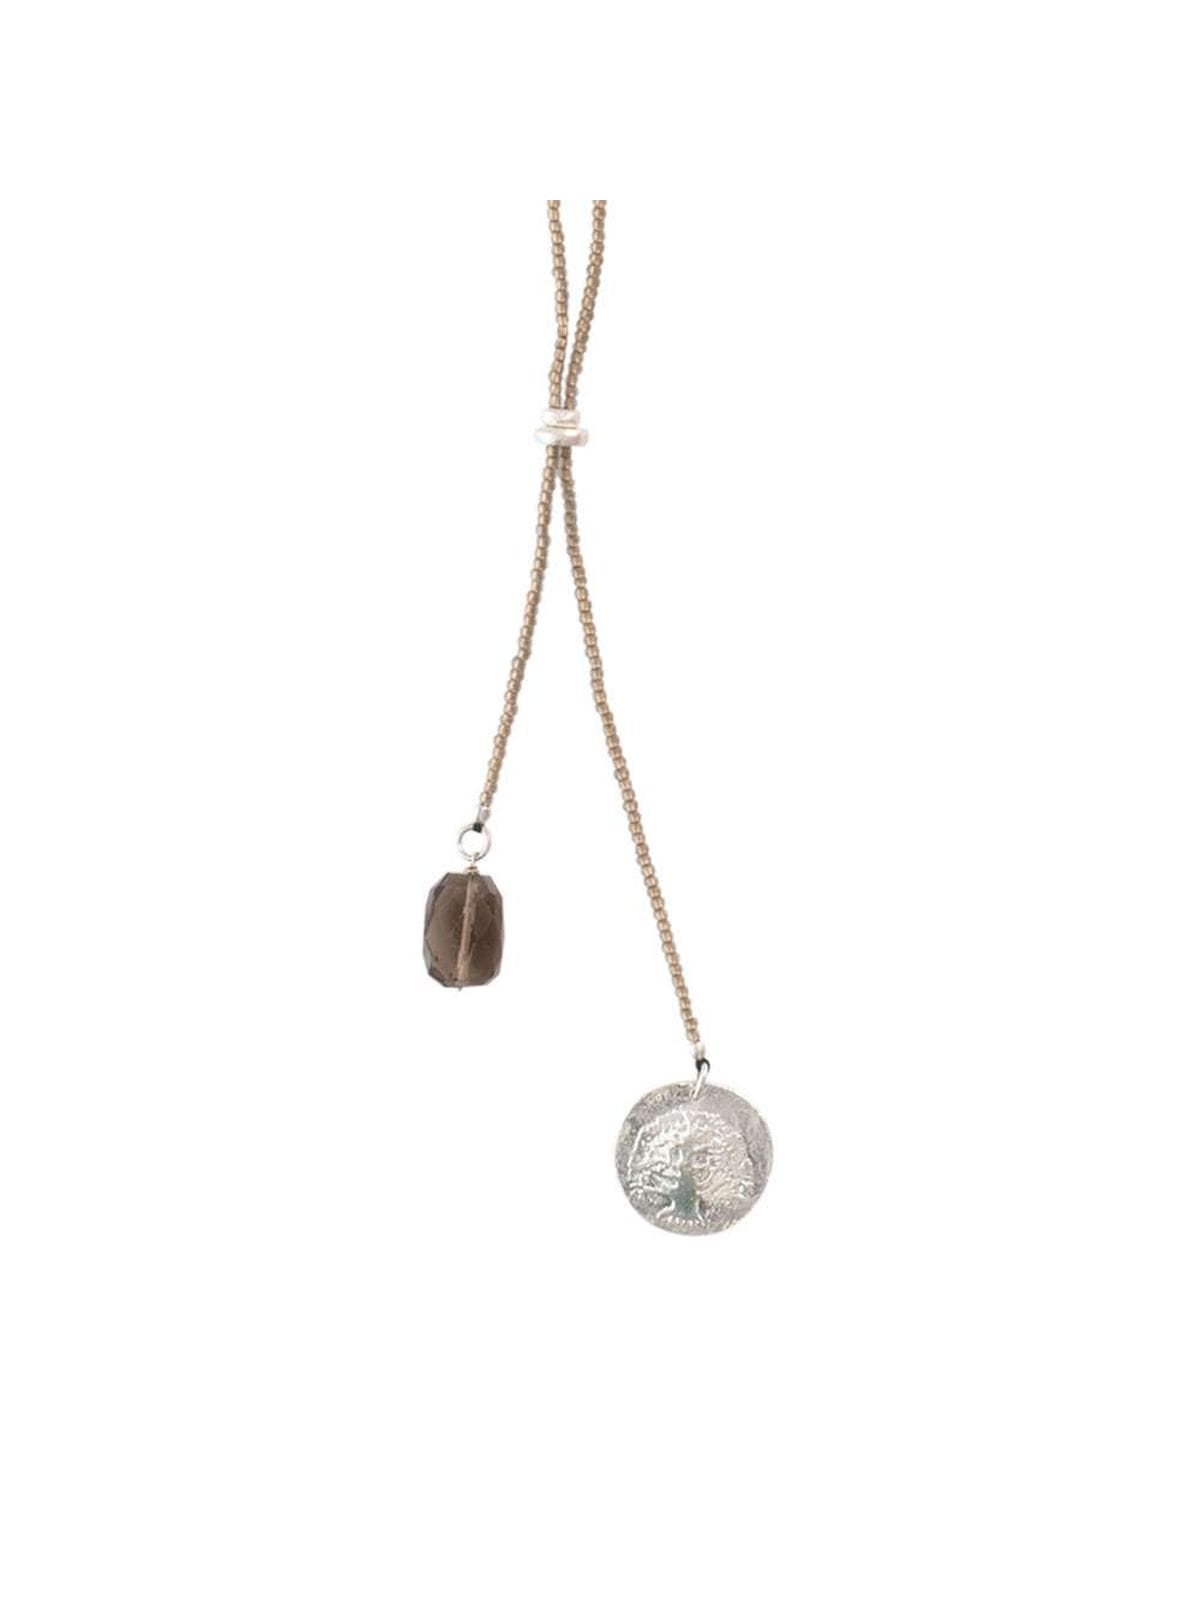 bl23158-fairy-smokey-quartz-tree-coin-silver-necklace_600x600@2x_1200x1600